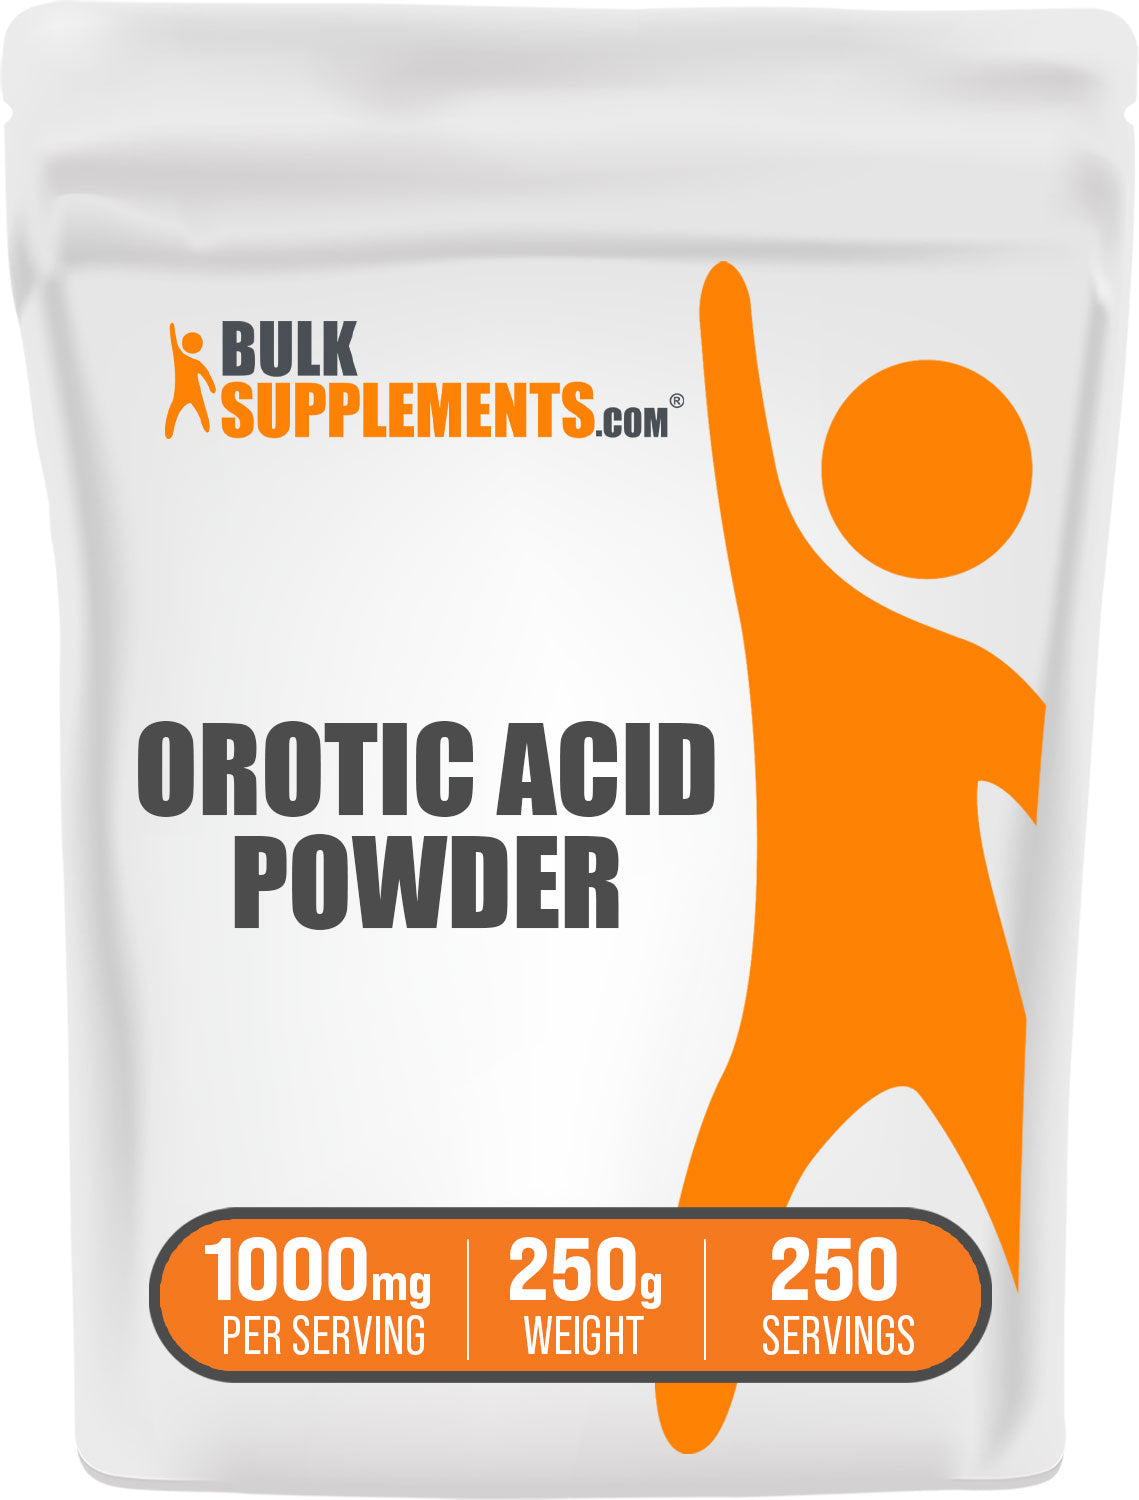 BulkSupplements.com Orotic Acid Powder 250g Bag